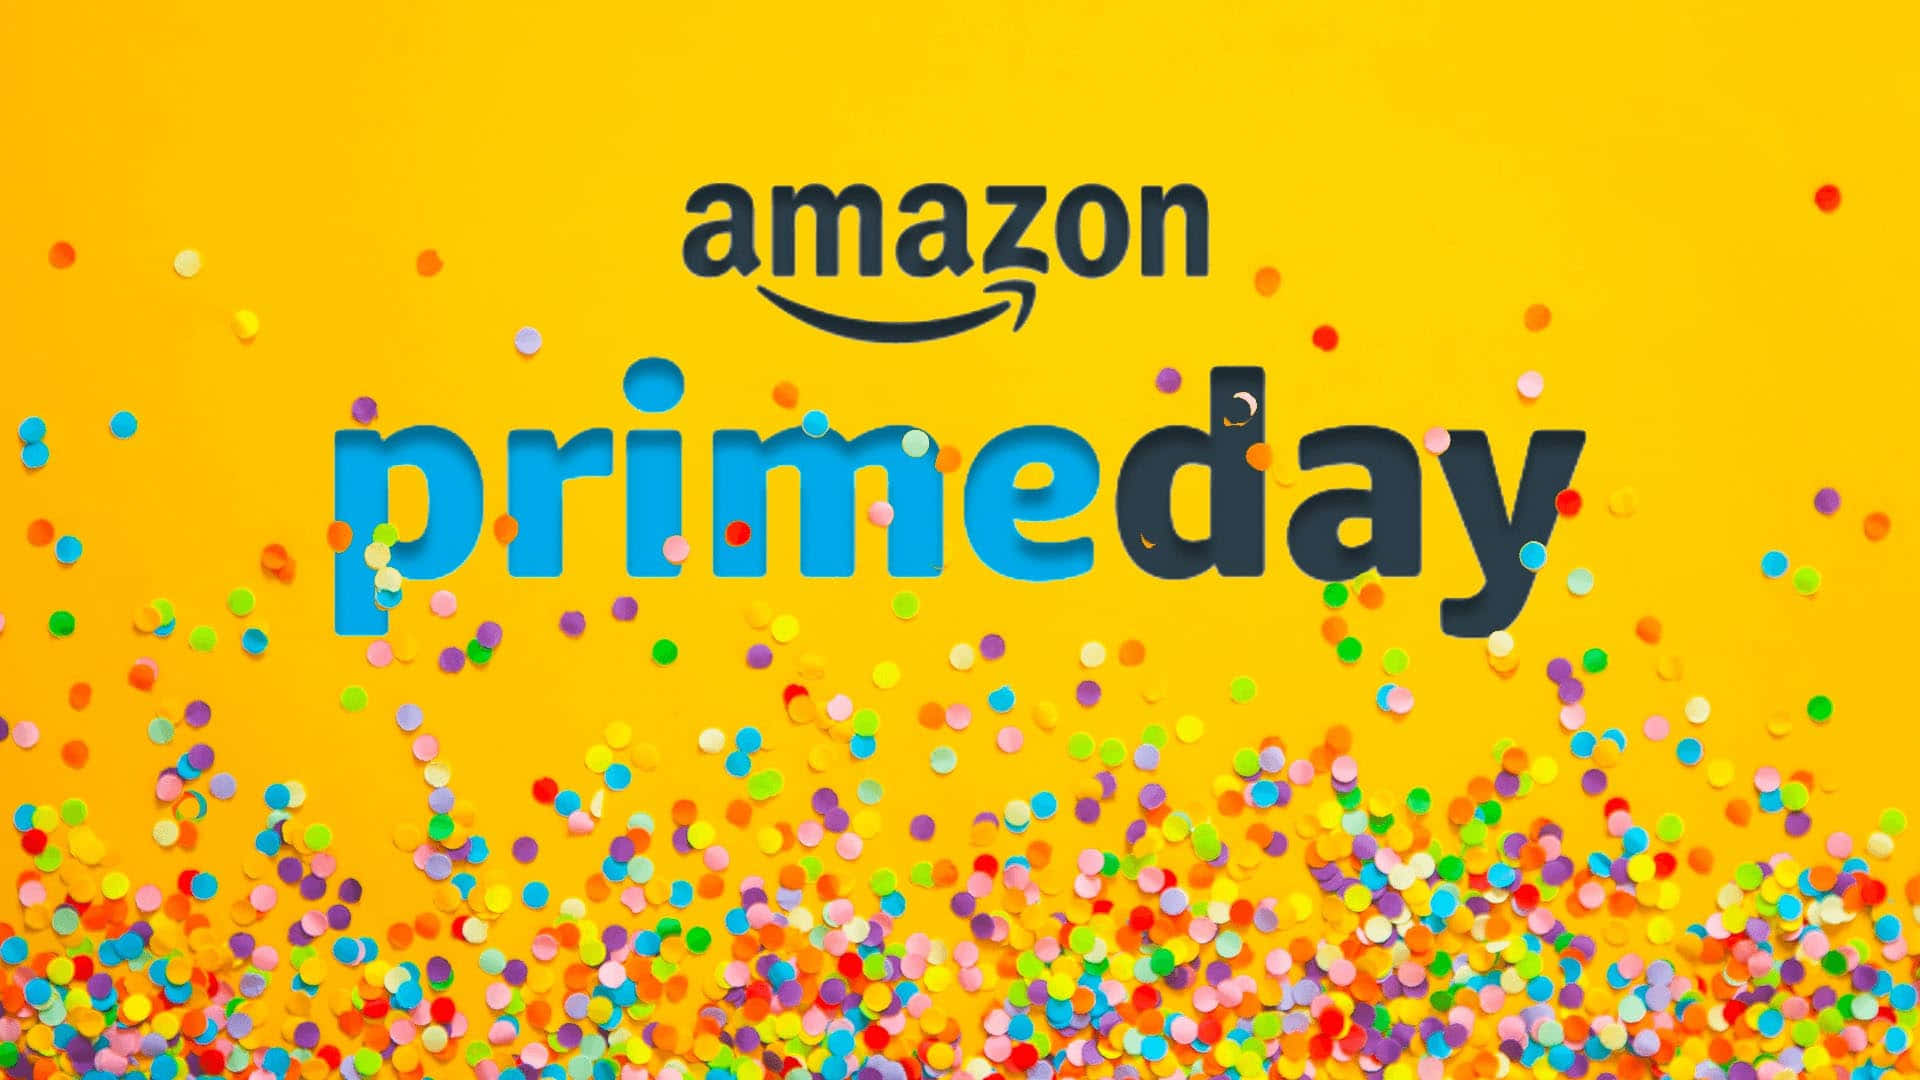 Amazon Prime Day Celebration Wallpaper